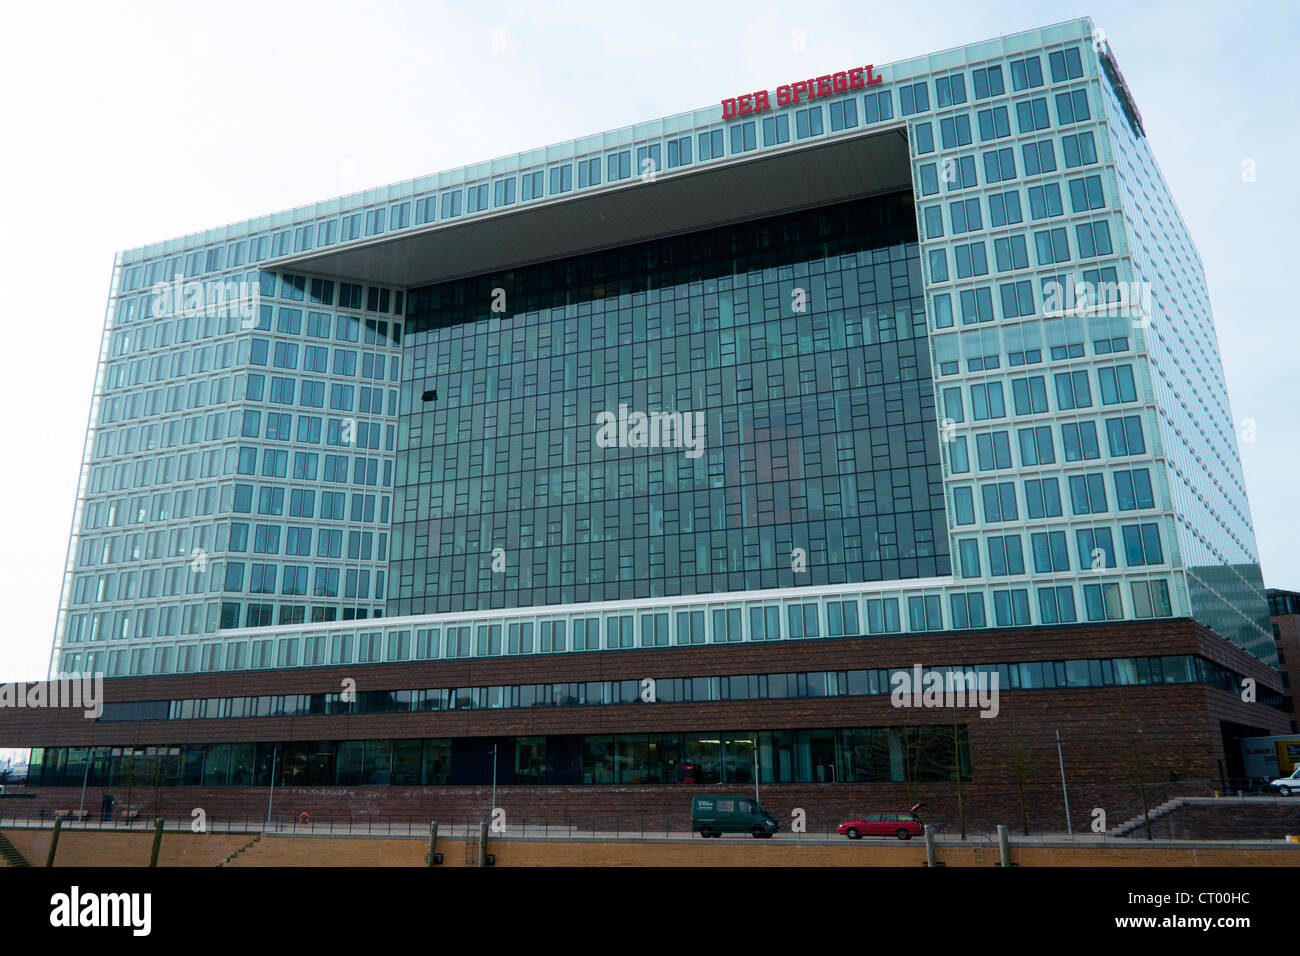 new headquarters of Der Spiegel news magazine in Hamburg Germany Stock Photo